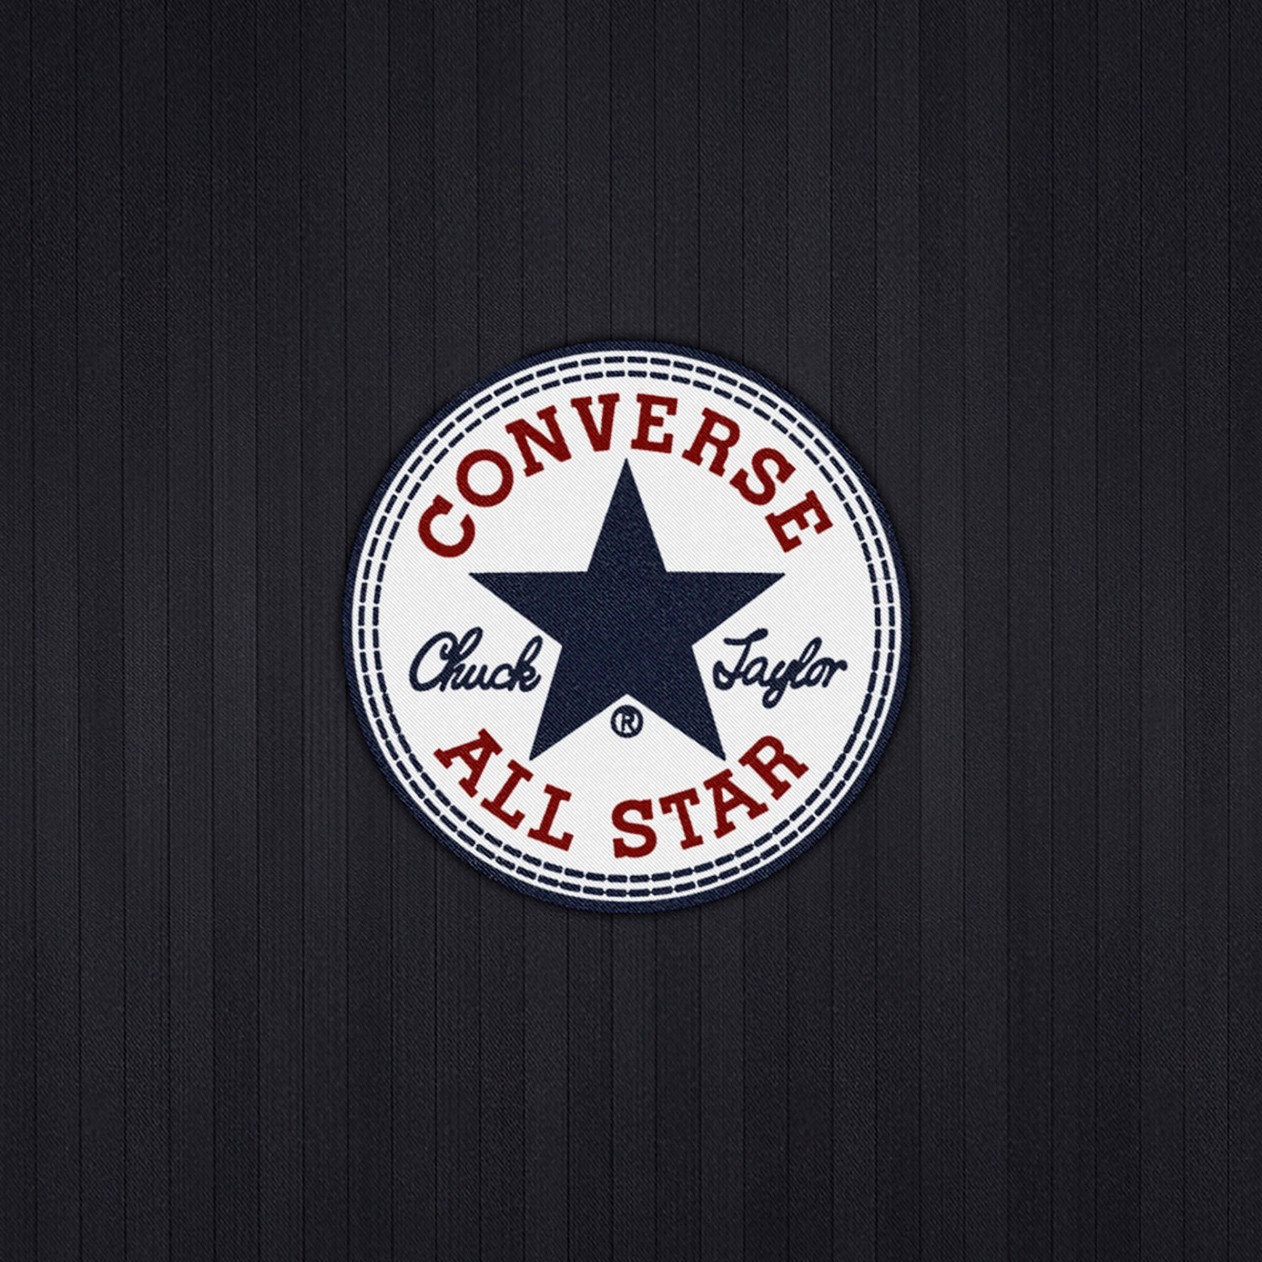 Converse All Star Wallpaper for Apple iPad mini